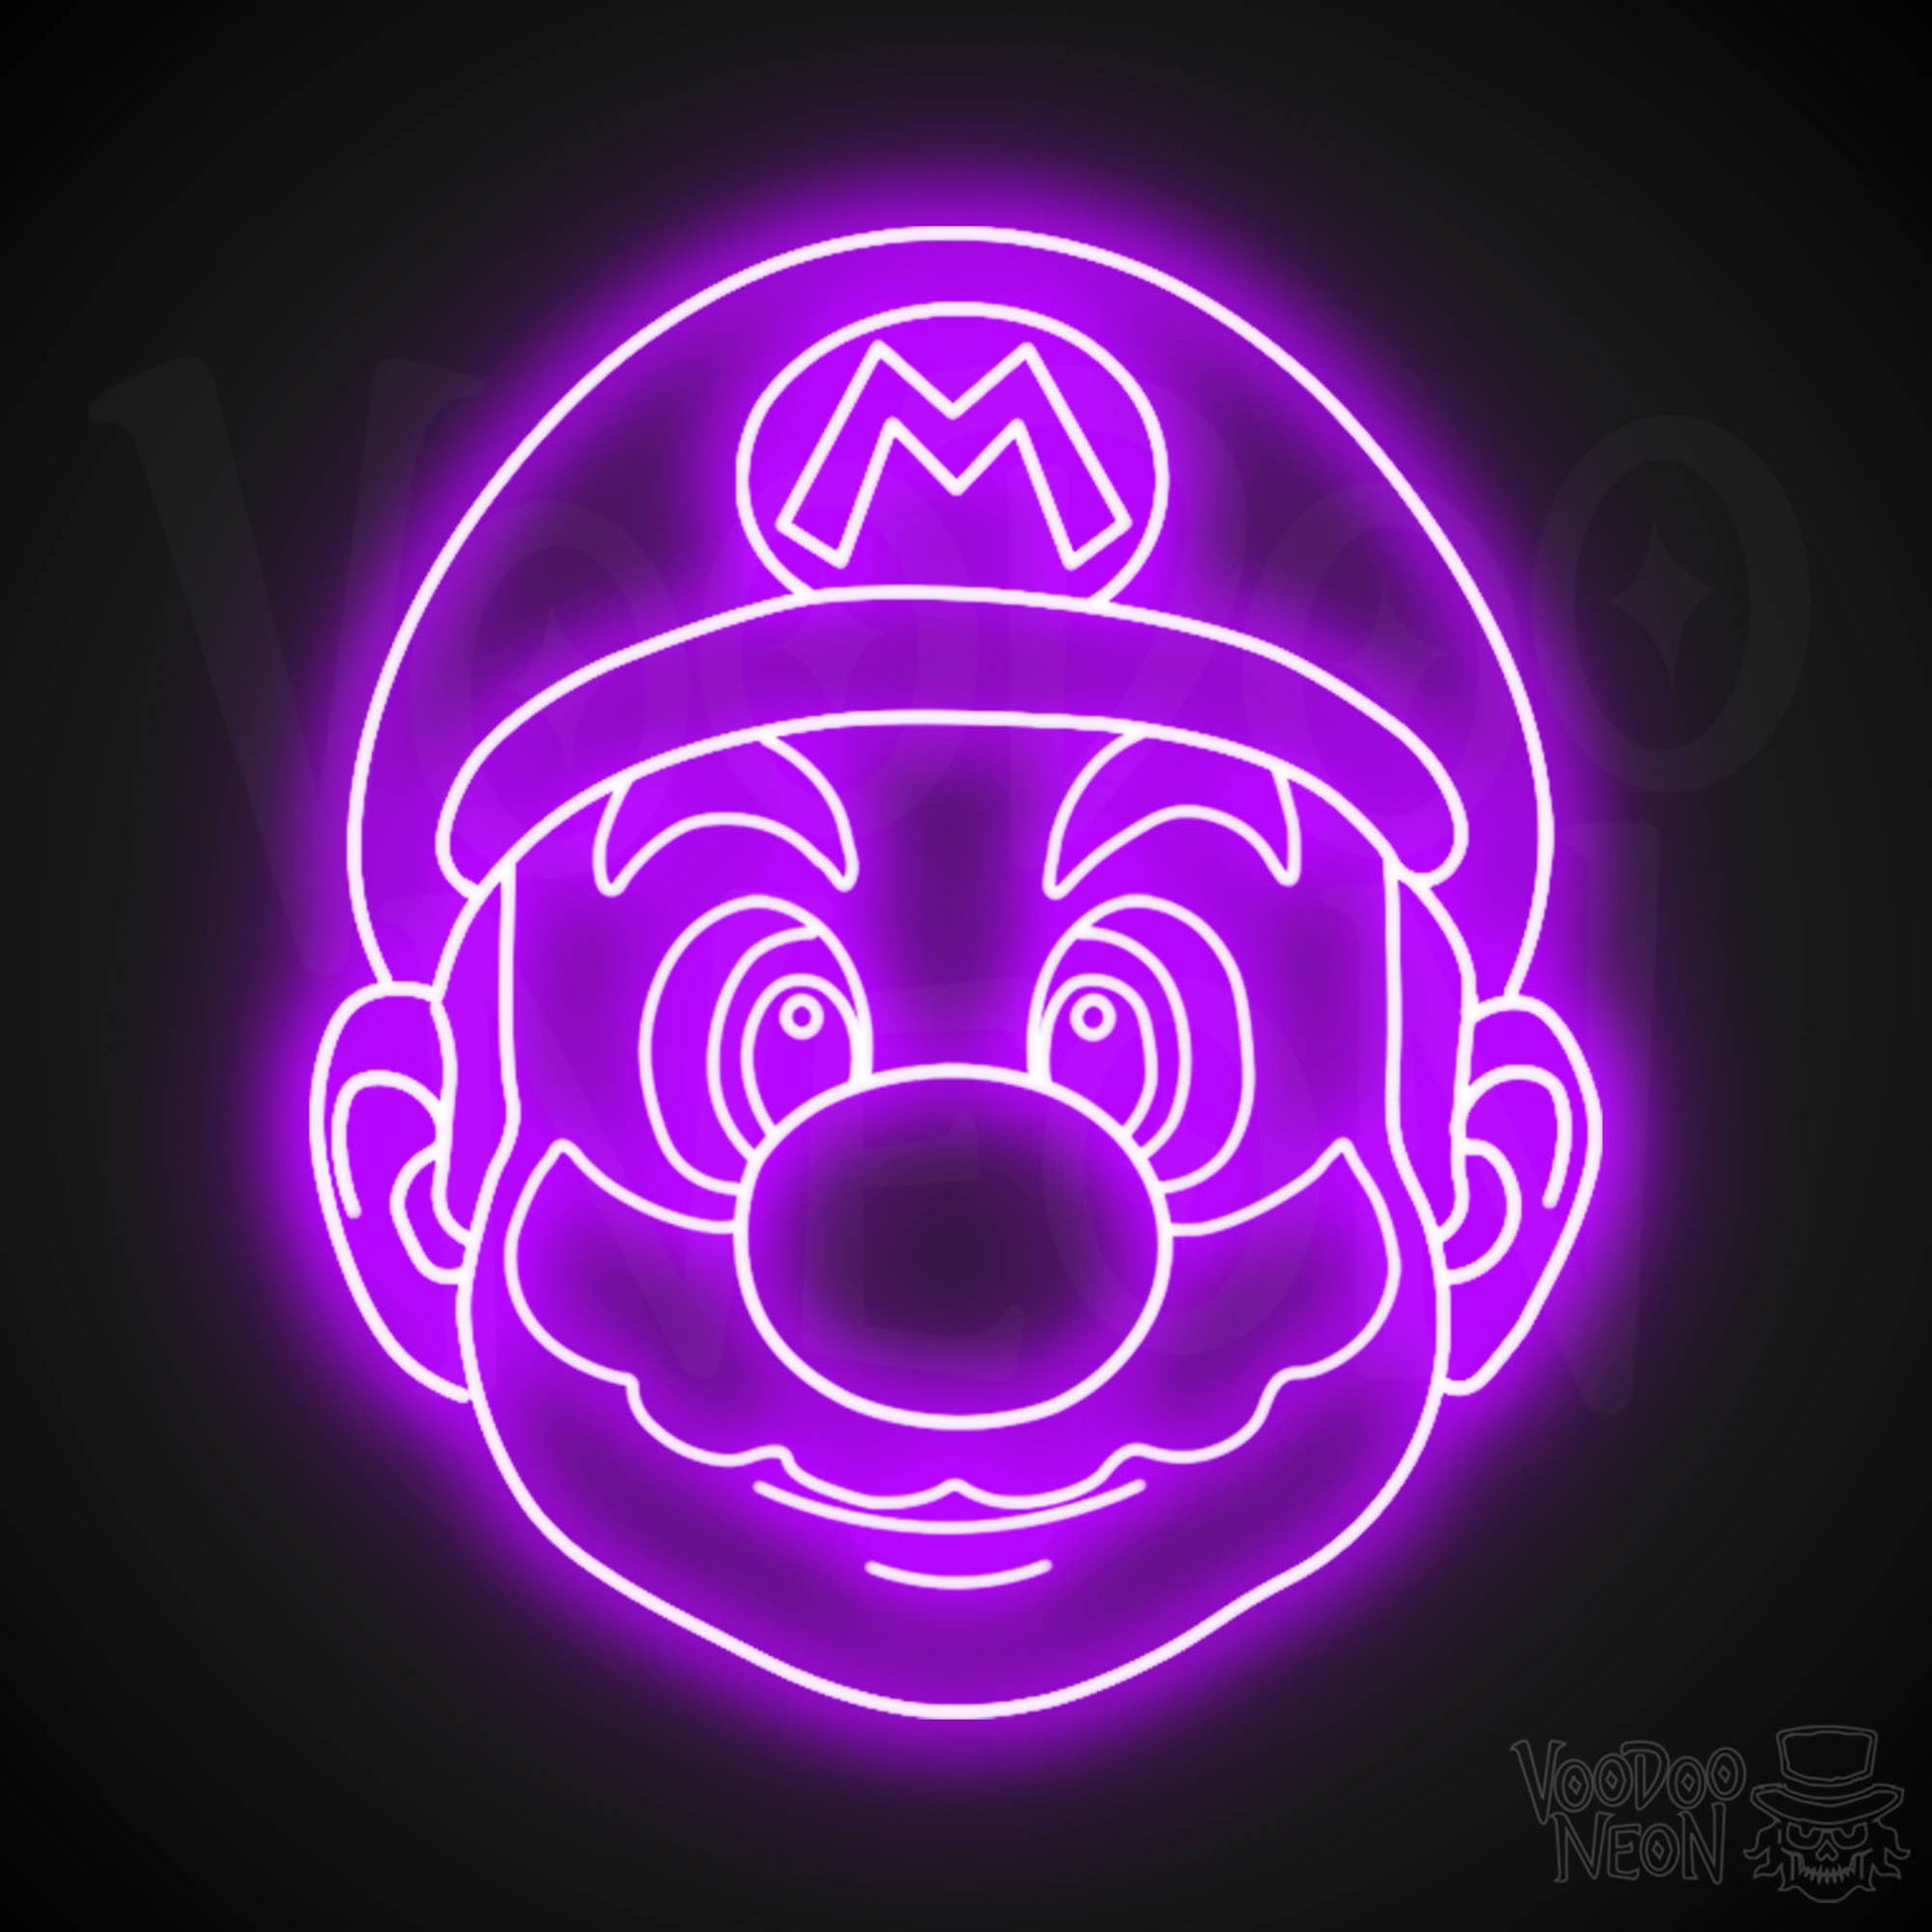 Mario Neon Sign - Mario Sign - Mario Wall Art - LED Neon Wall Art - Color Purple